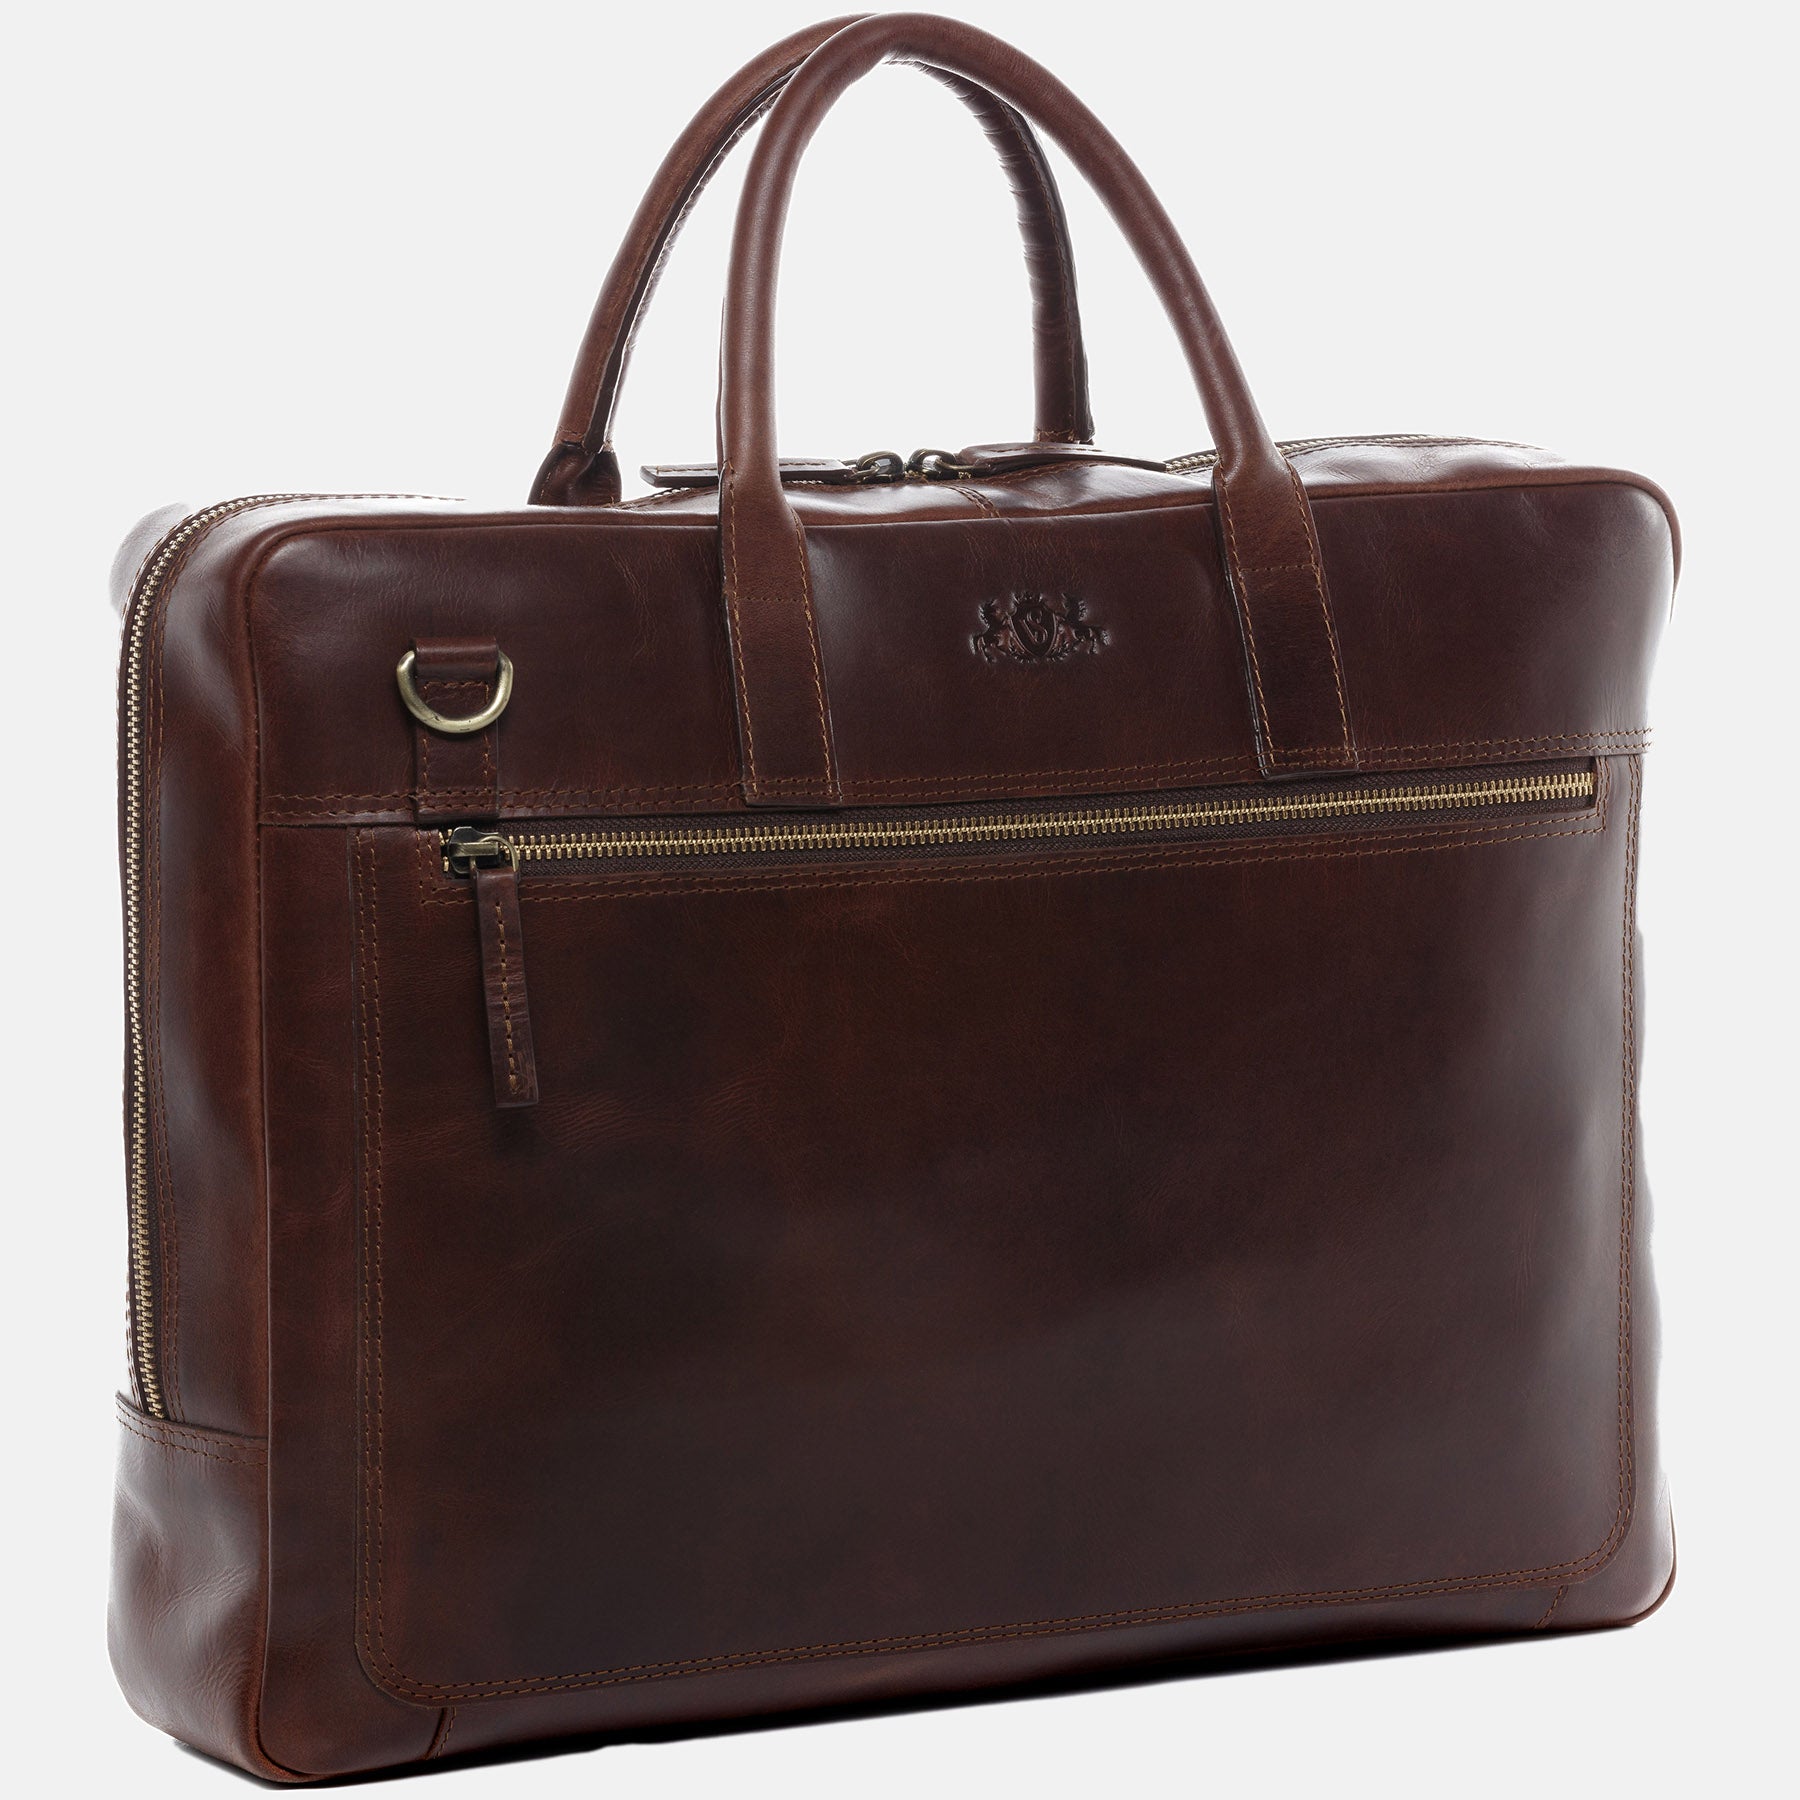 Laptop bag DIXON natural leather brown-cognac